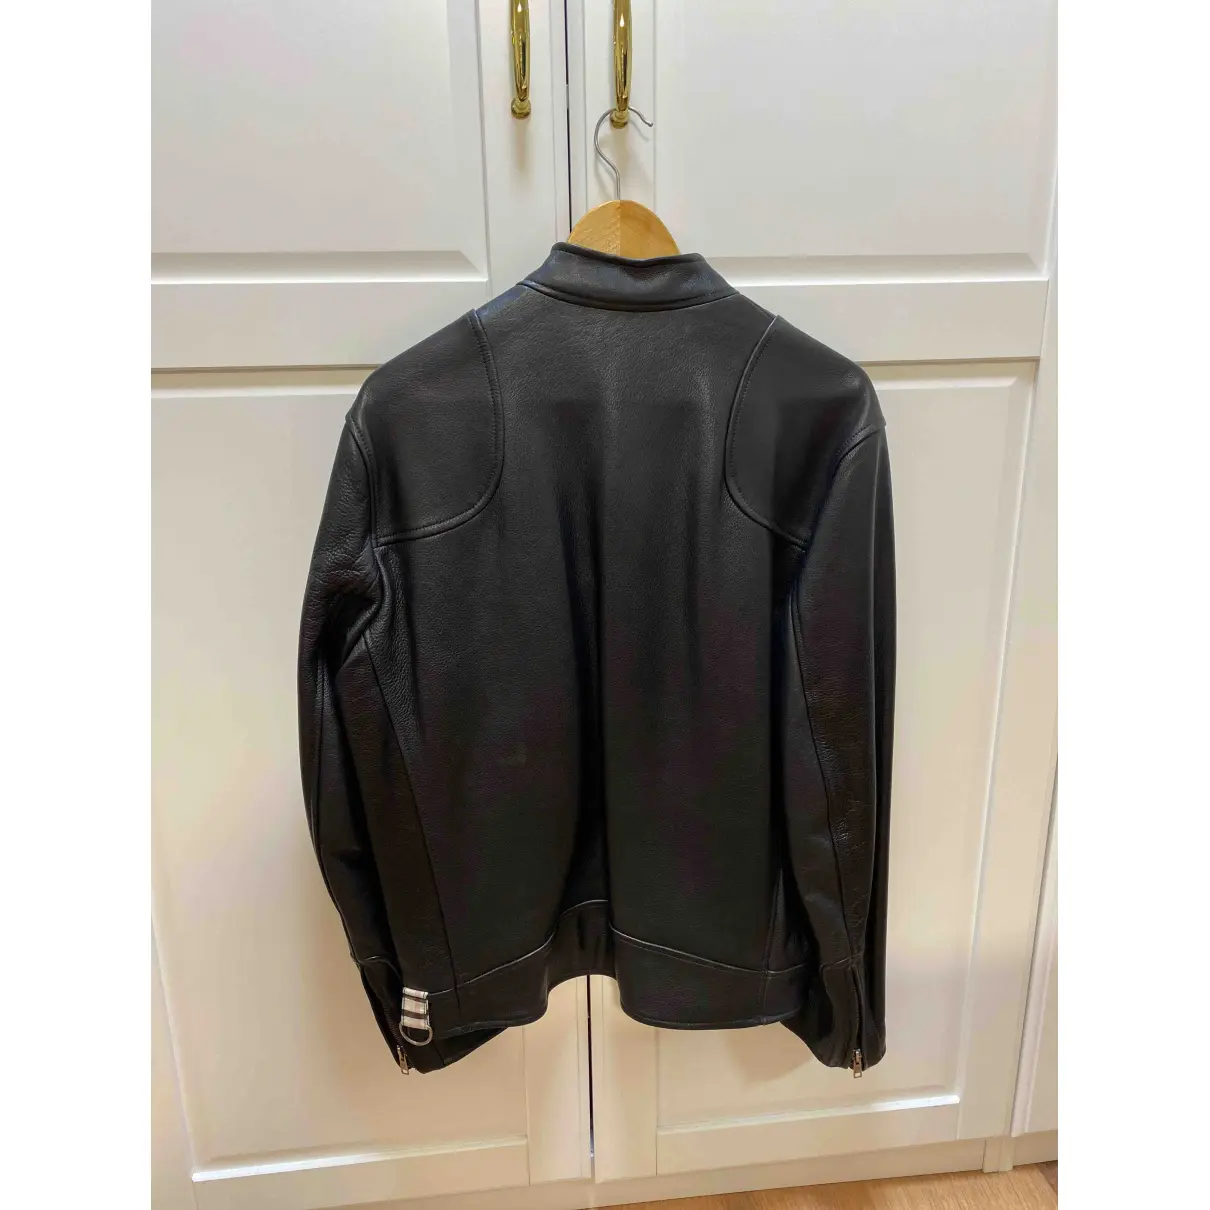 Buy Daks Leather jacket online